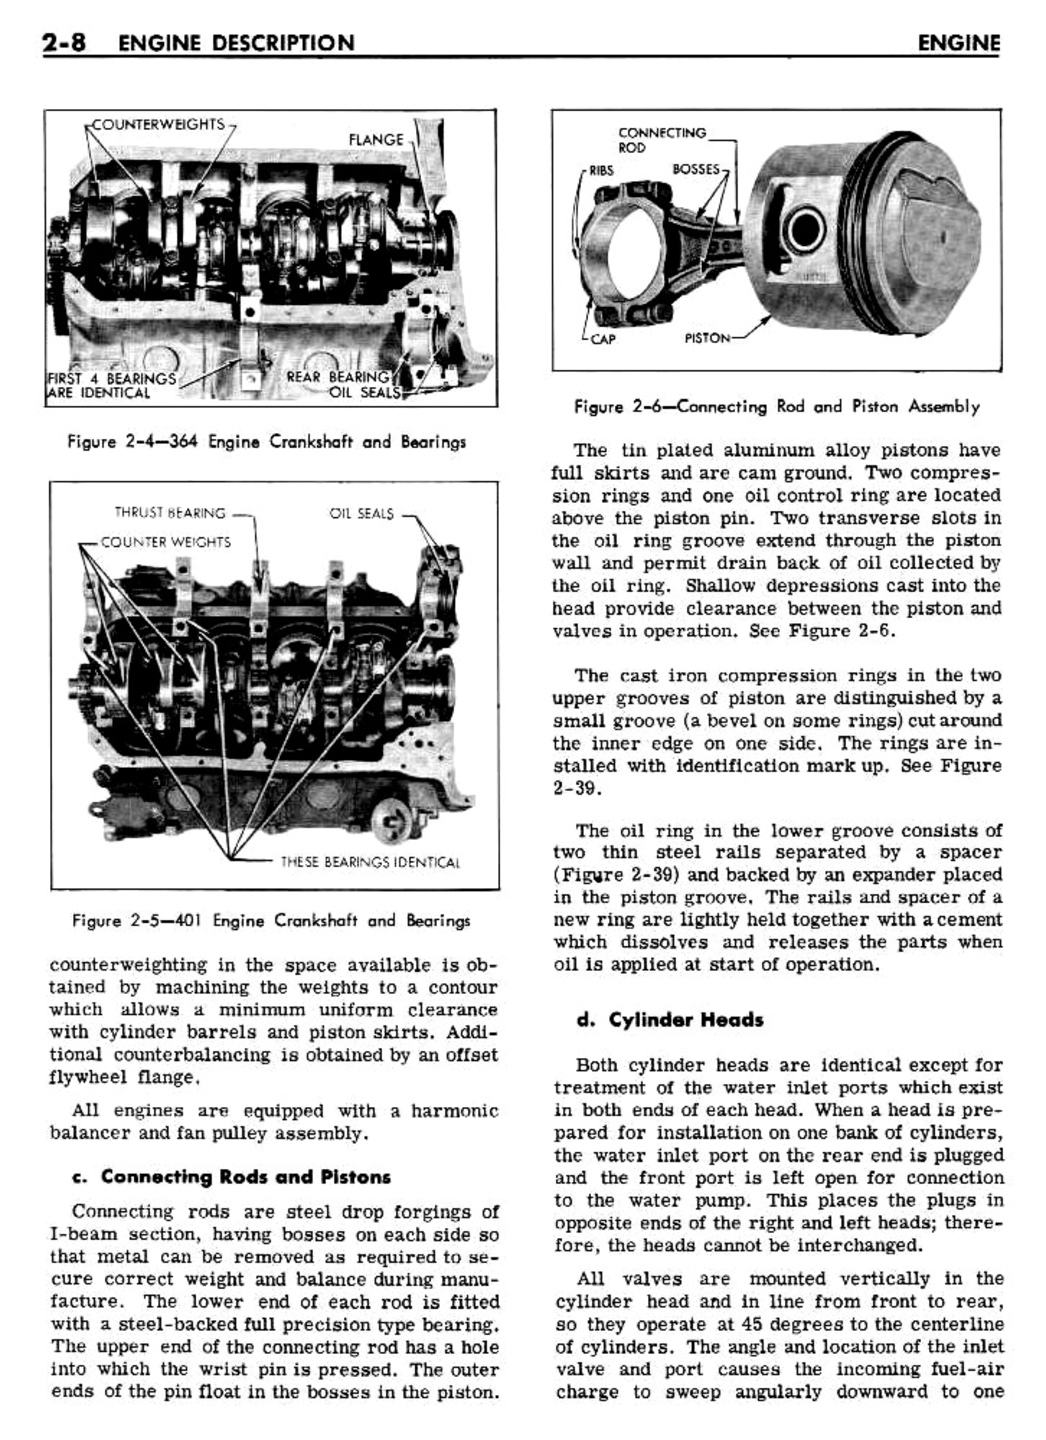 n_03 1961 Buick Shop Manual - Engine-008-008.jpg